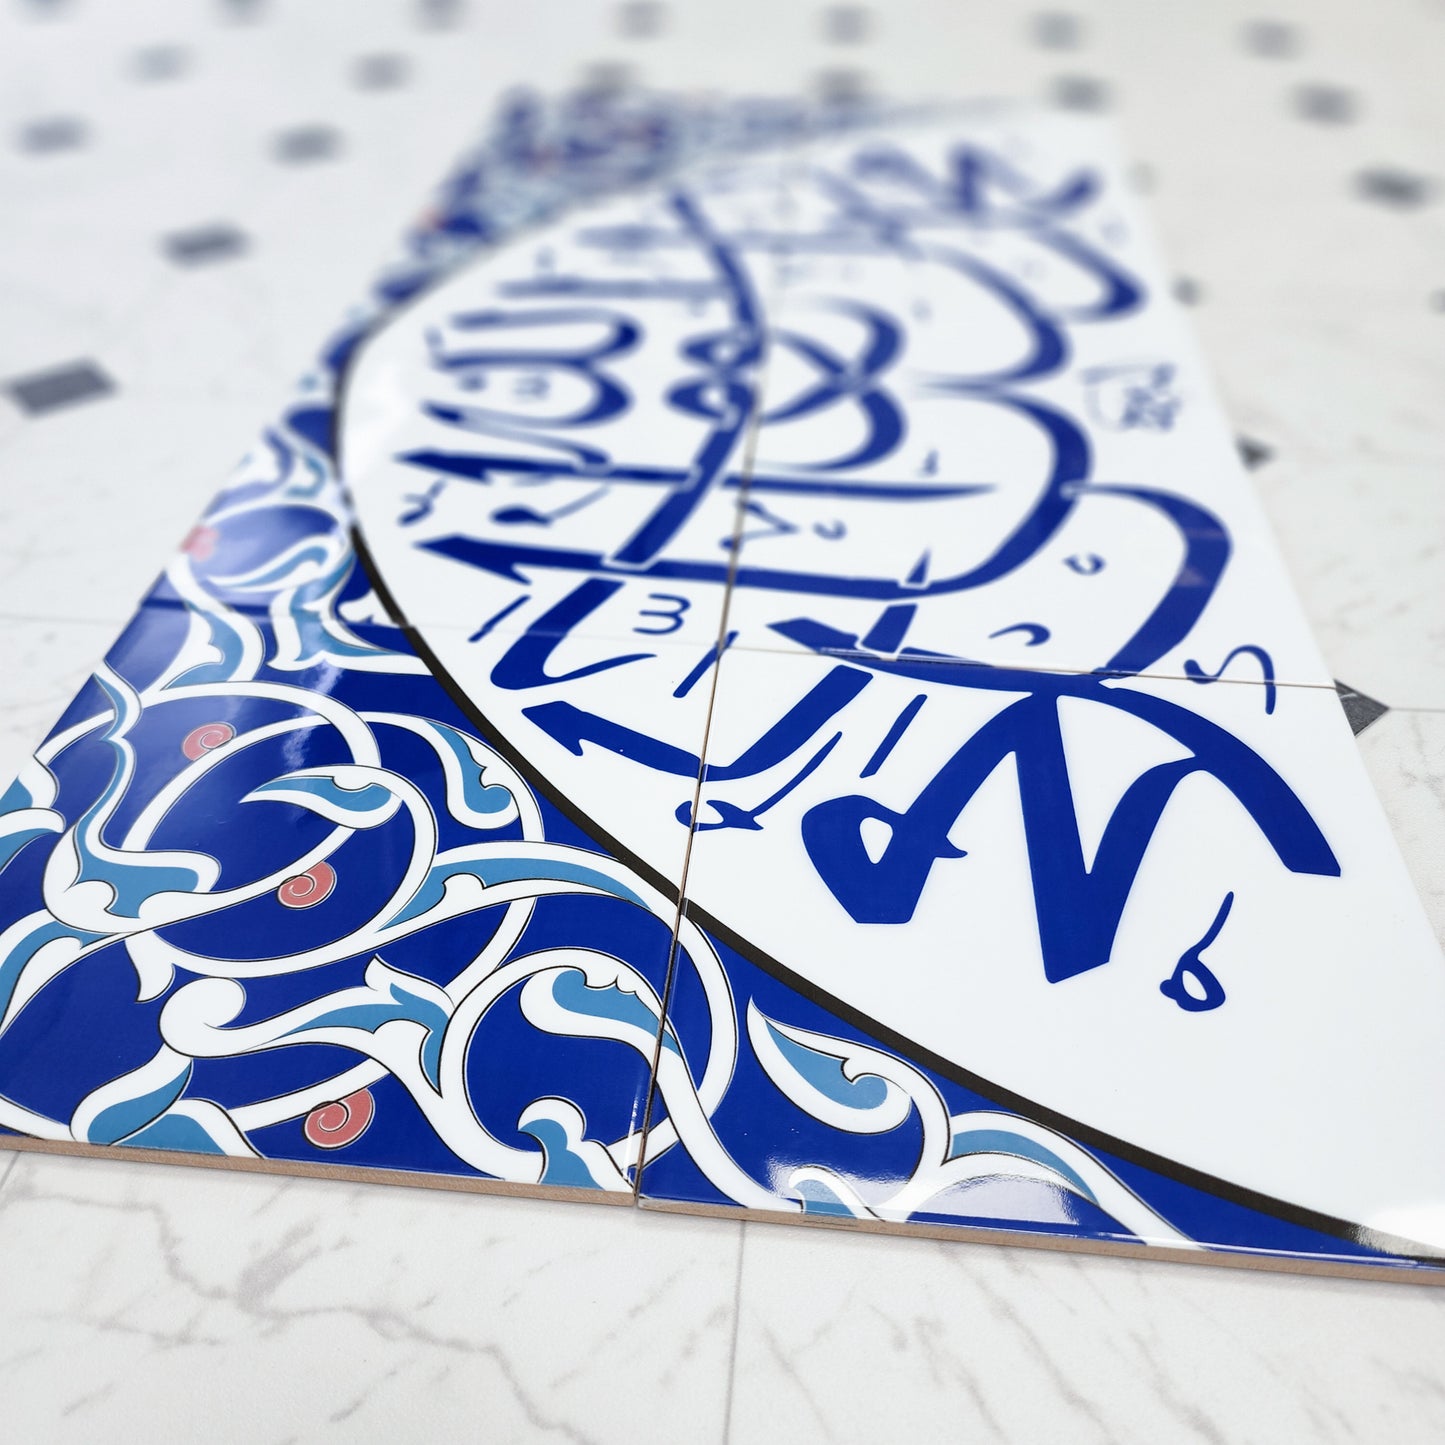 Kalimai Tavhid 16x31 Blue - Islamic Art Calligraphy Ceramic Tile